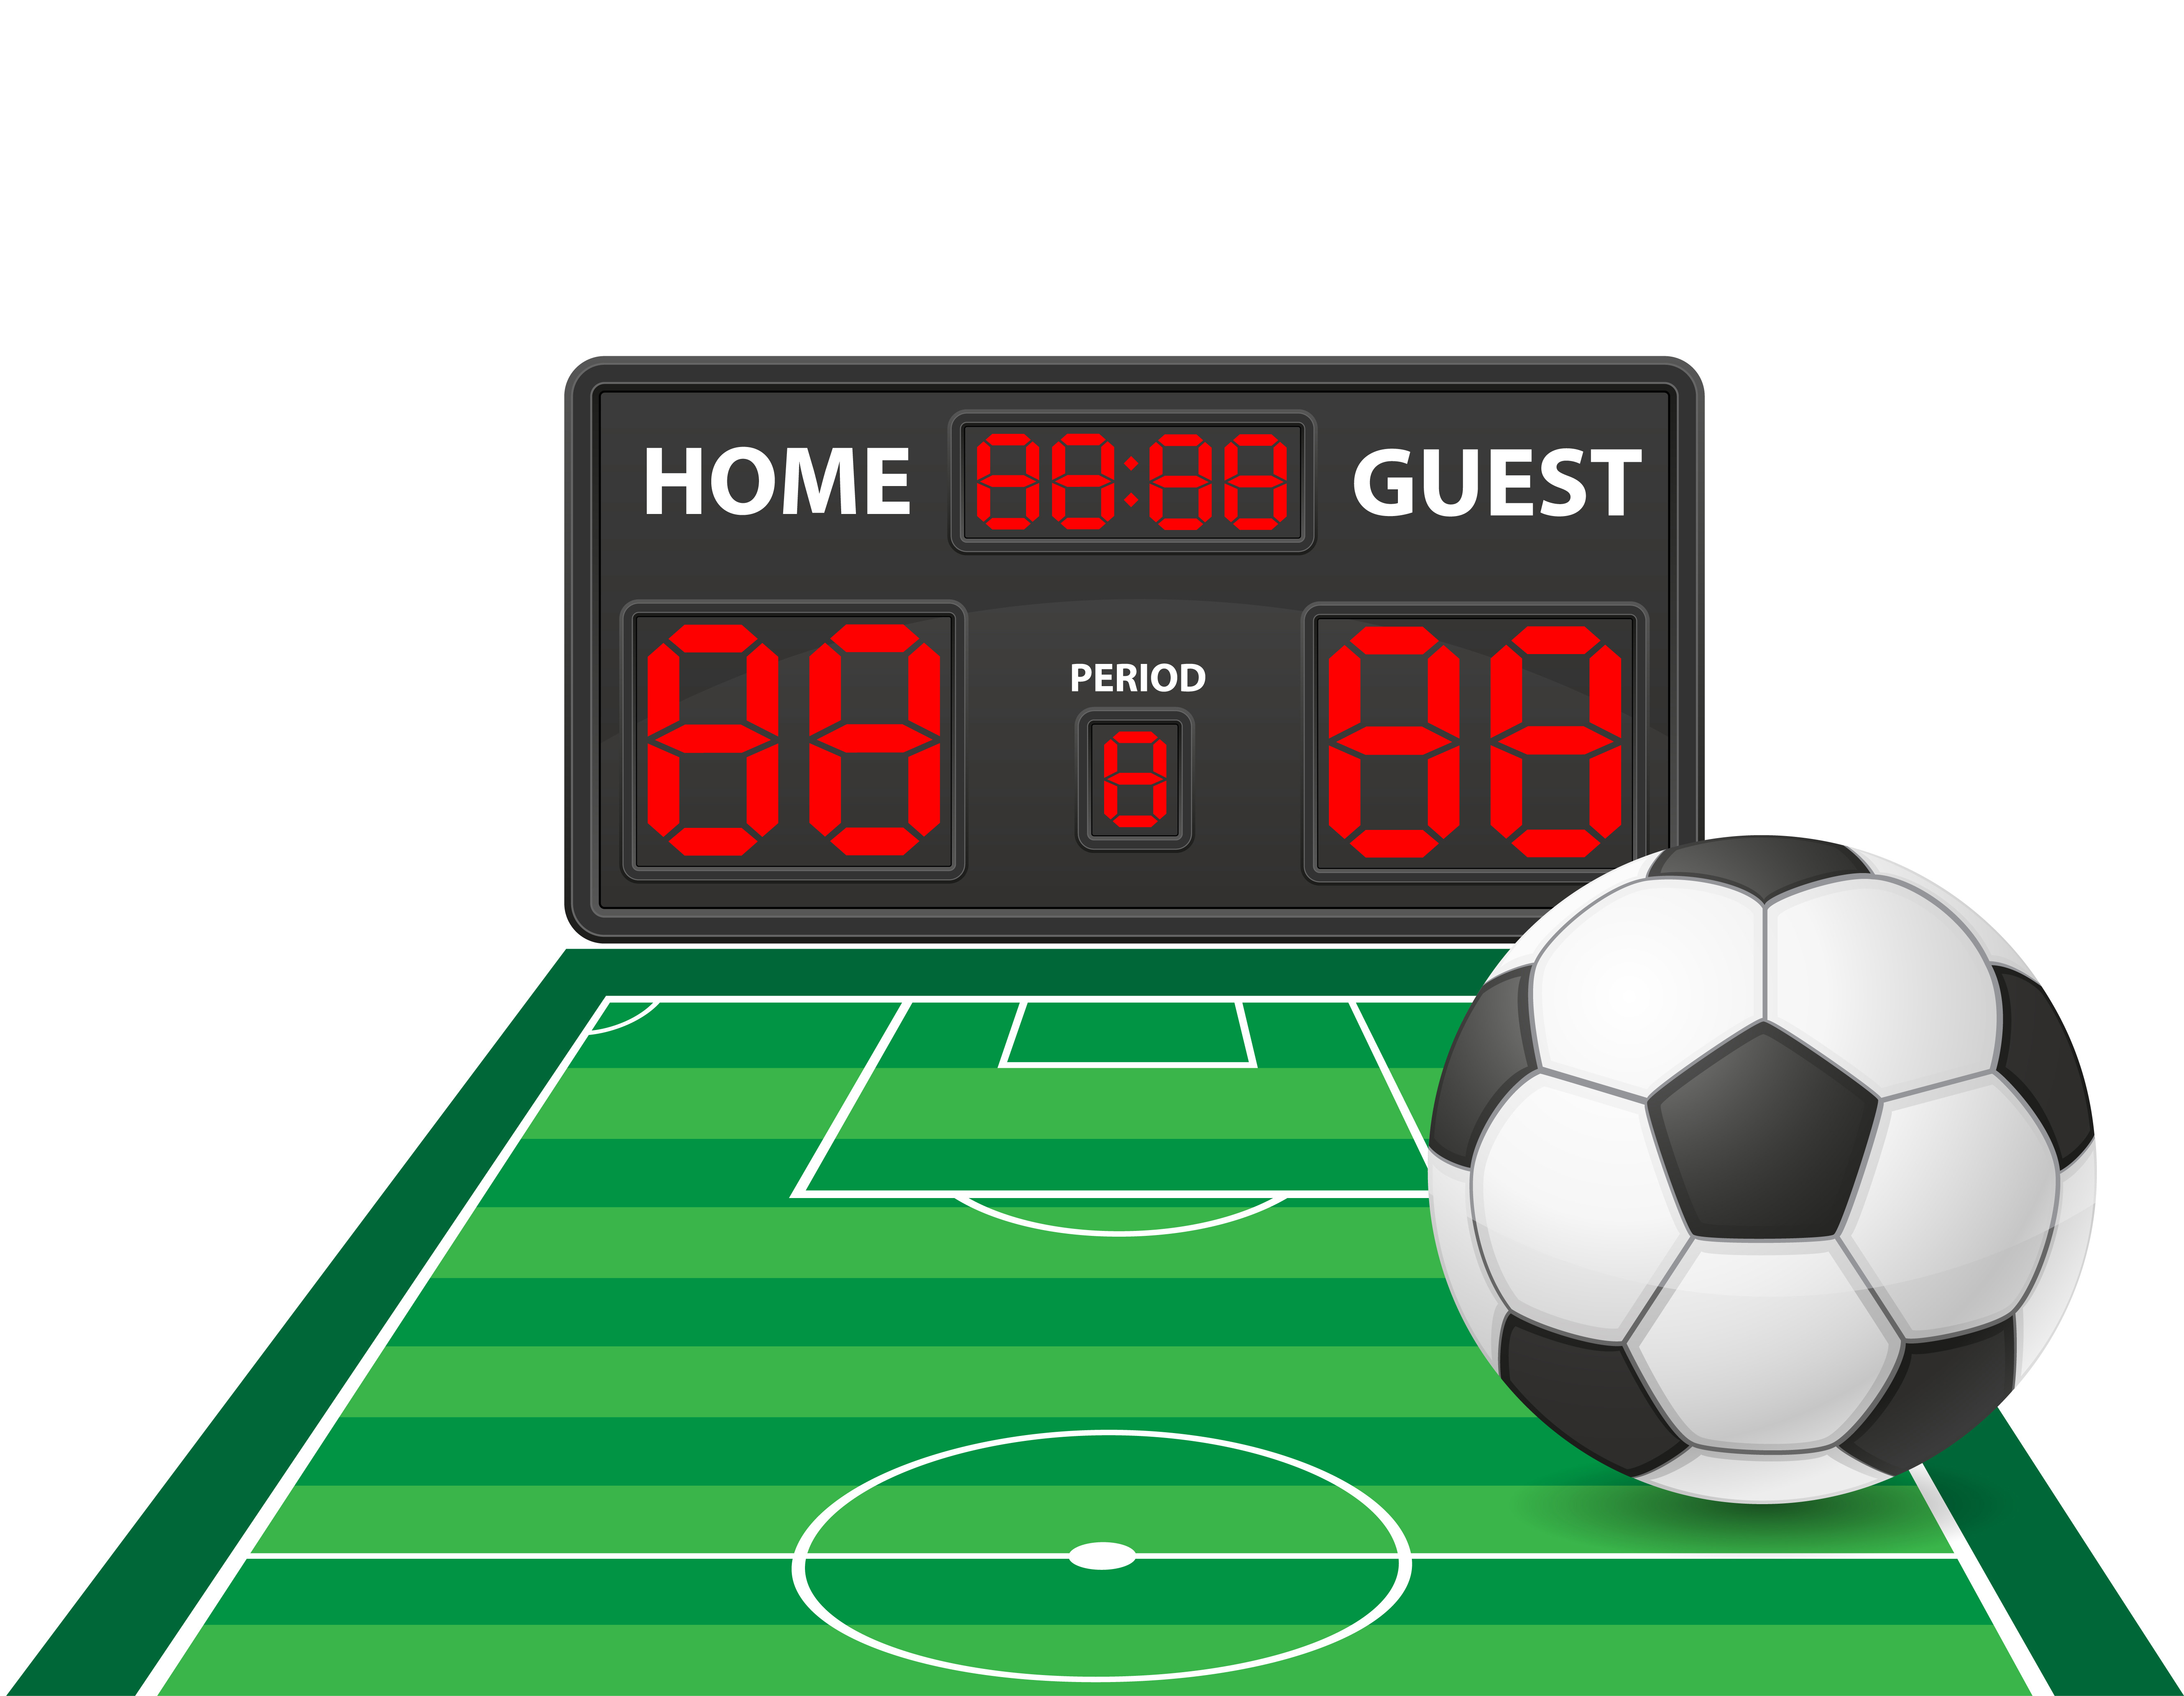 Football Soccer Sports Digital Scoreboard Vector Illustration Download Free Vectors Clipart Graphics Vector Art